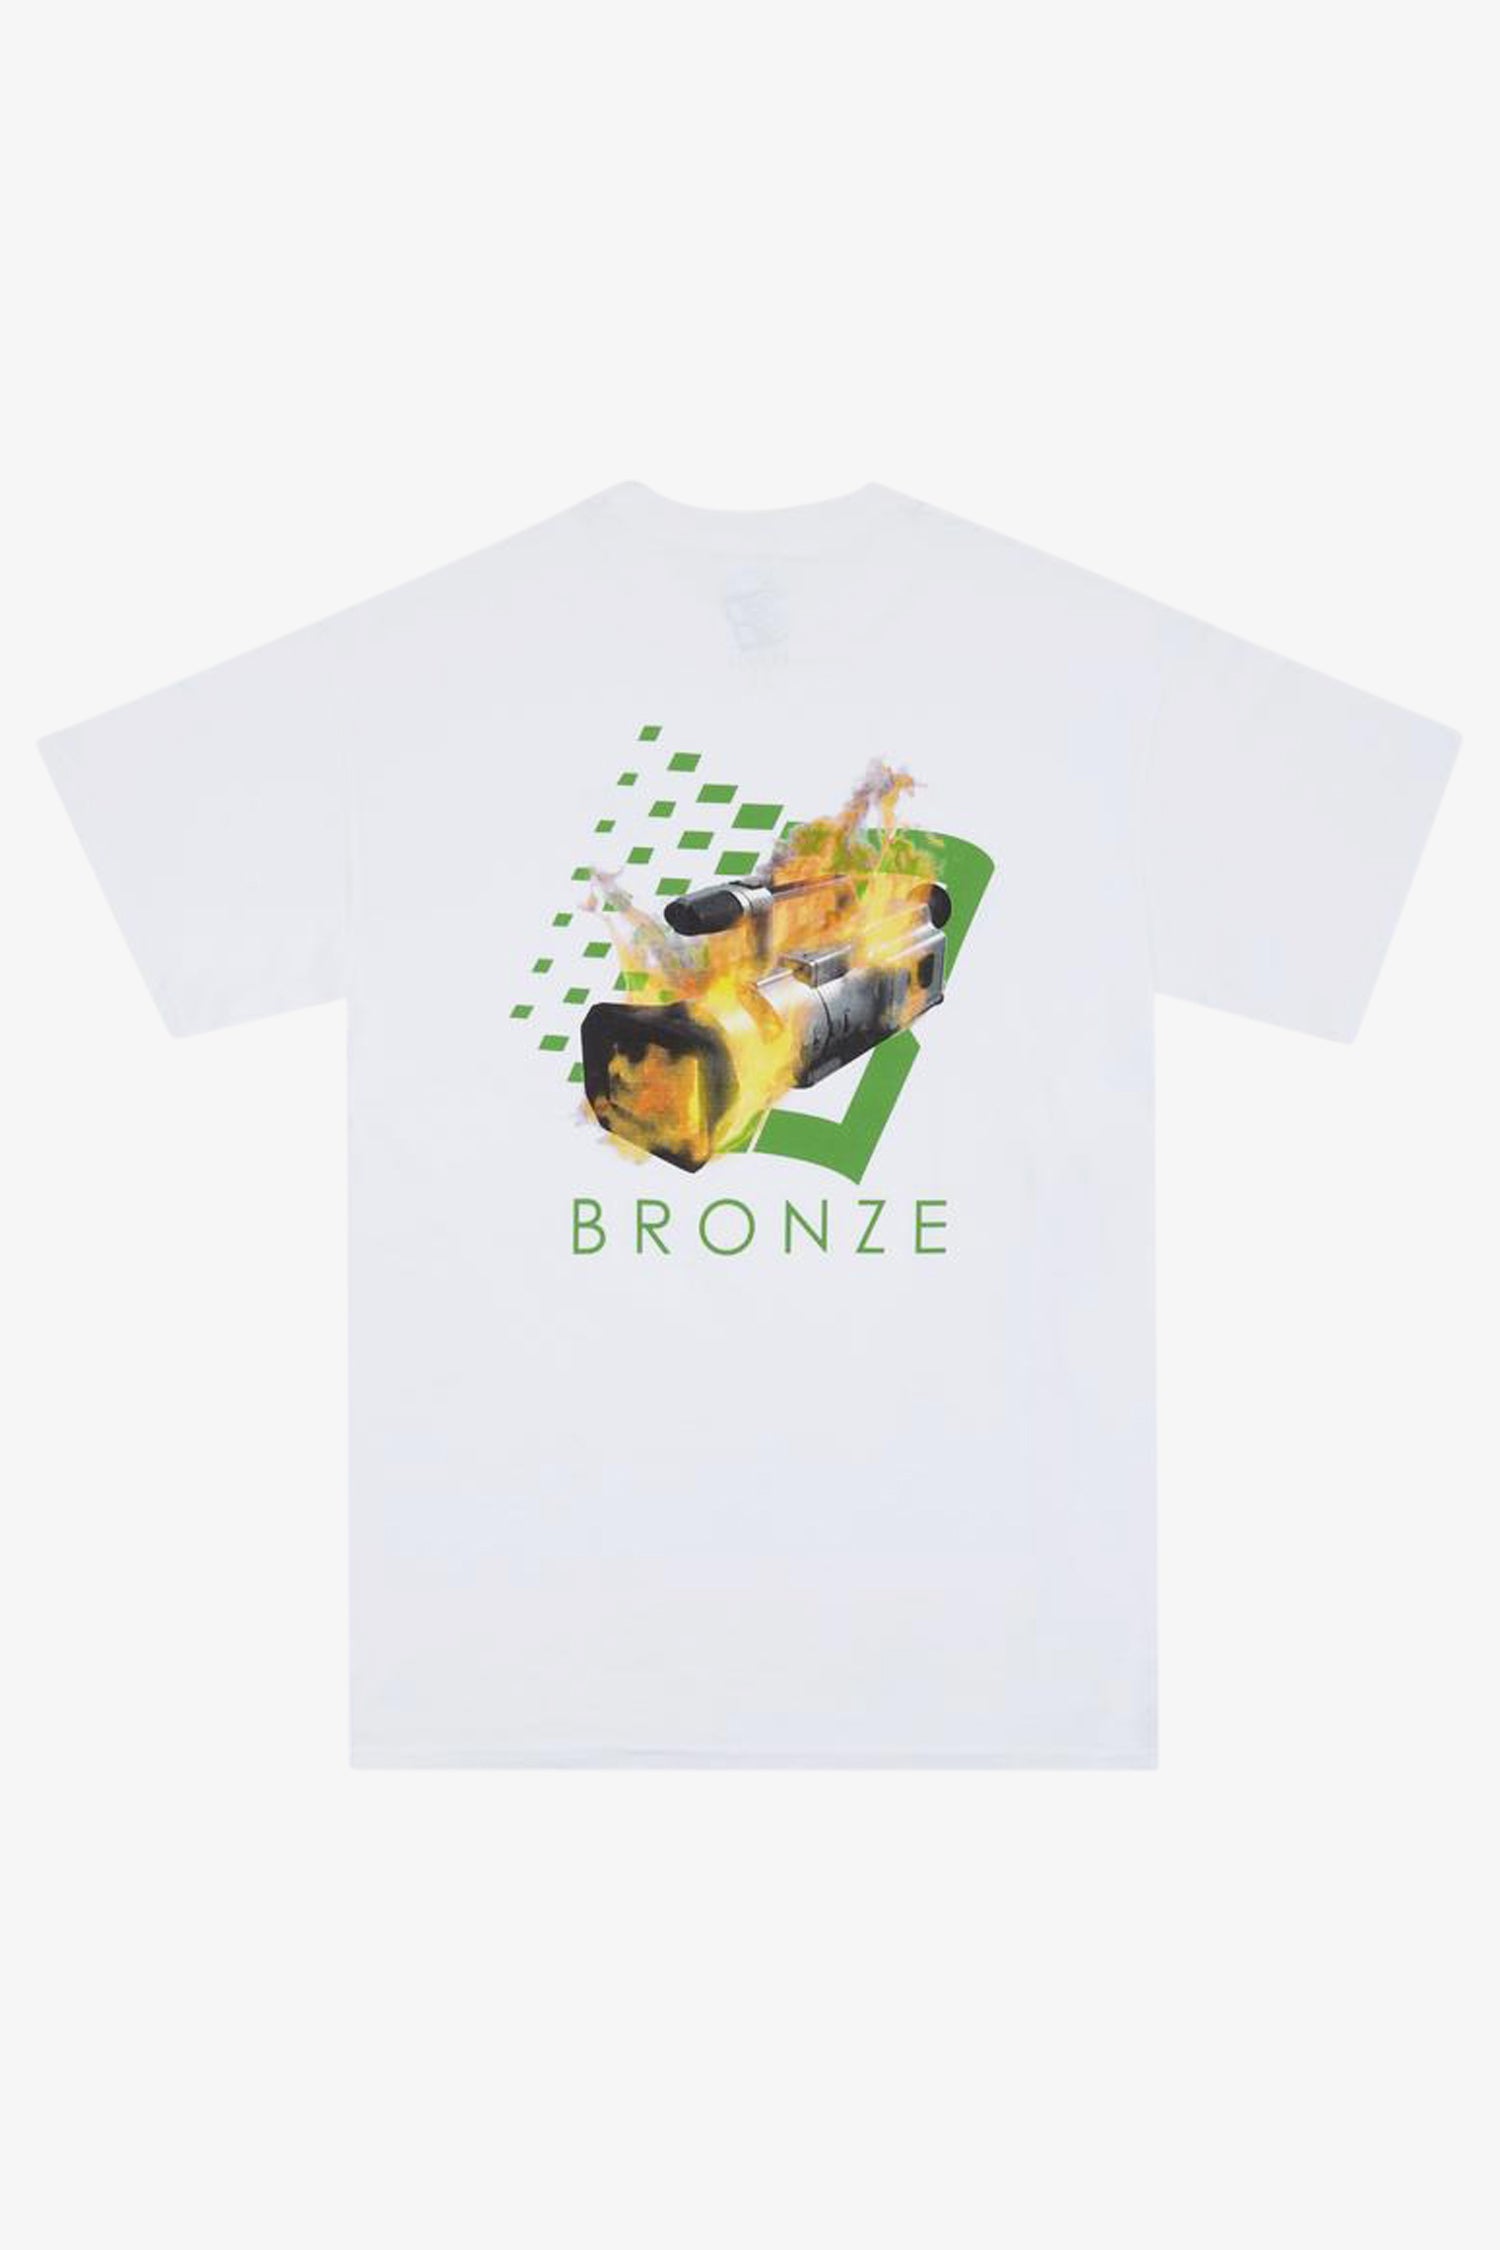 Selectshop FRAME - BRONZE 56K VX B Logo Tee T-Shirt Dubai